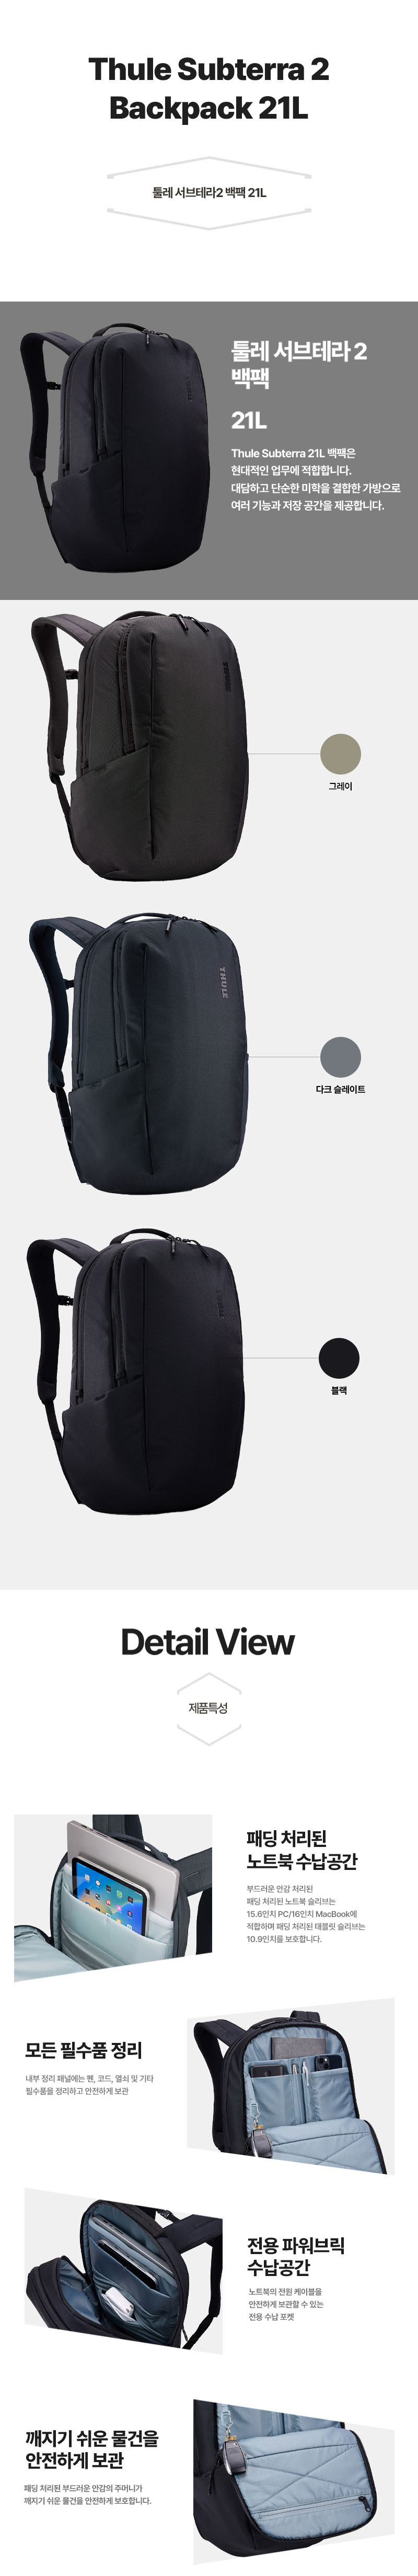 Backpack-21L-01.jpg